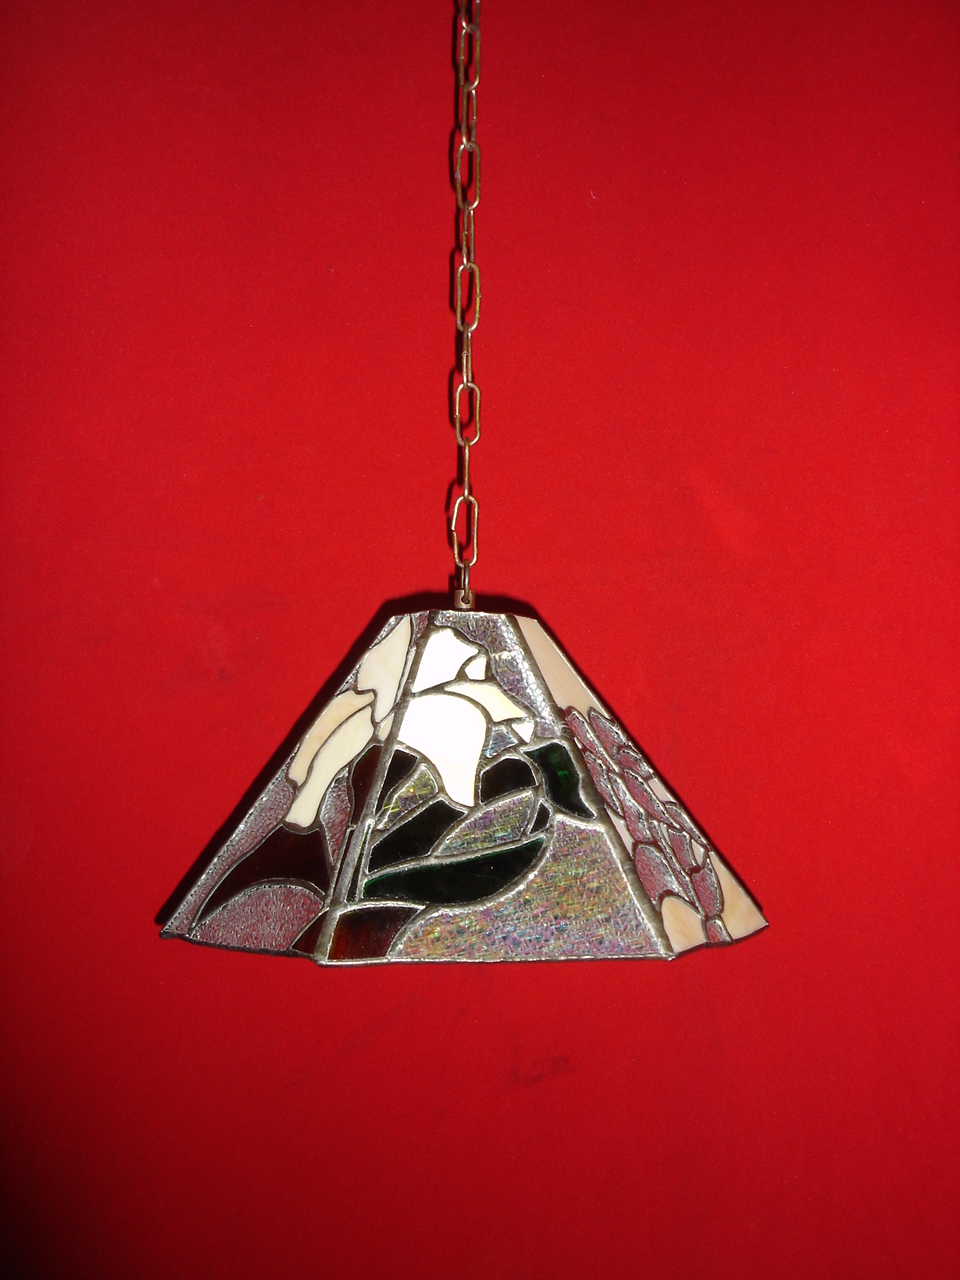 Tiffany Hanging Lamp Item codeB74 wide_11'' high_7'